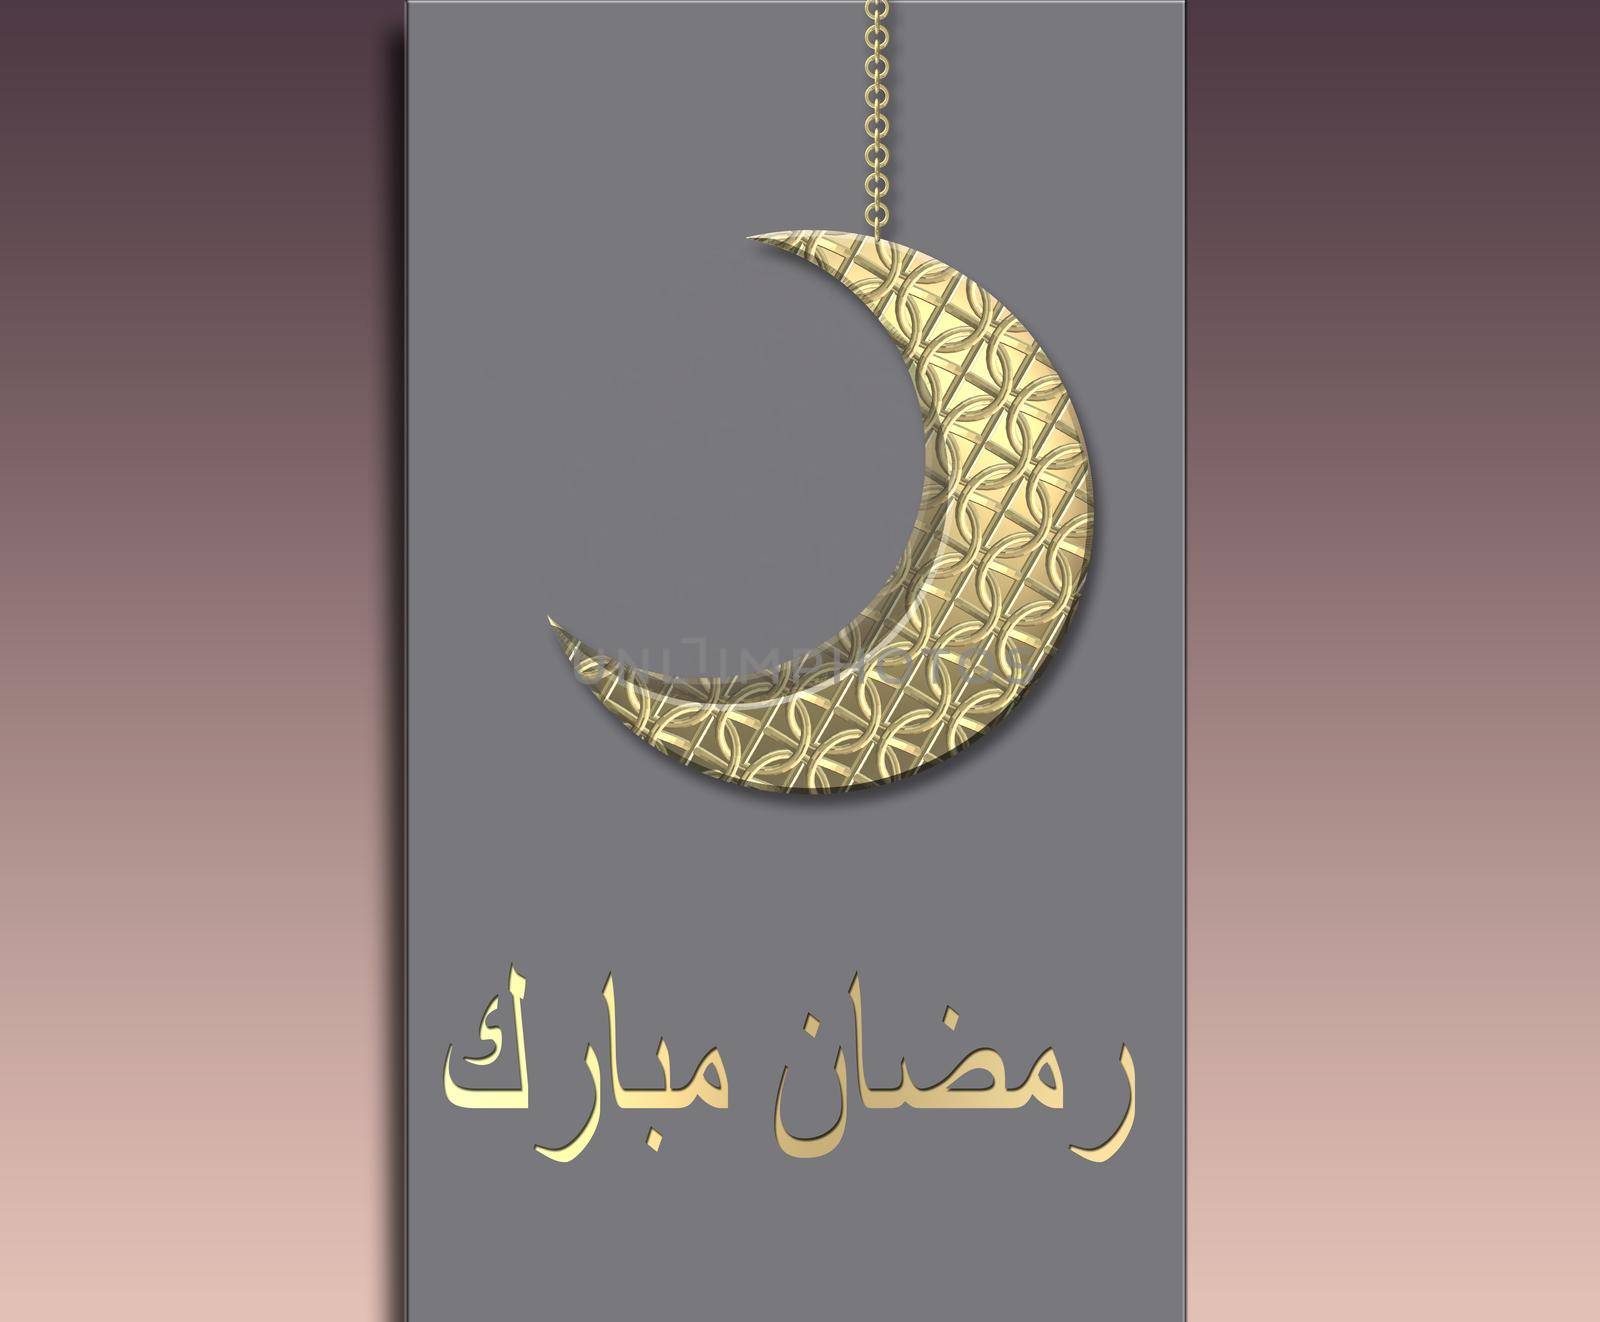 Crescent moon background for Ramadan celebration card by NelliPolk